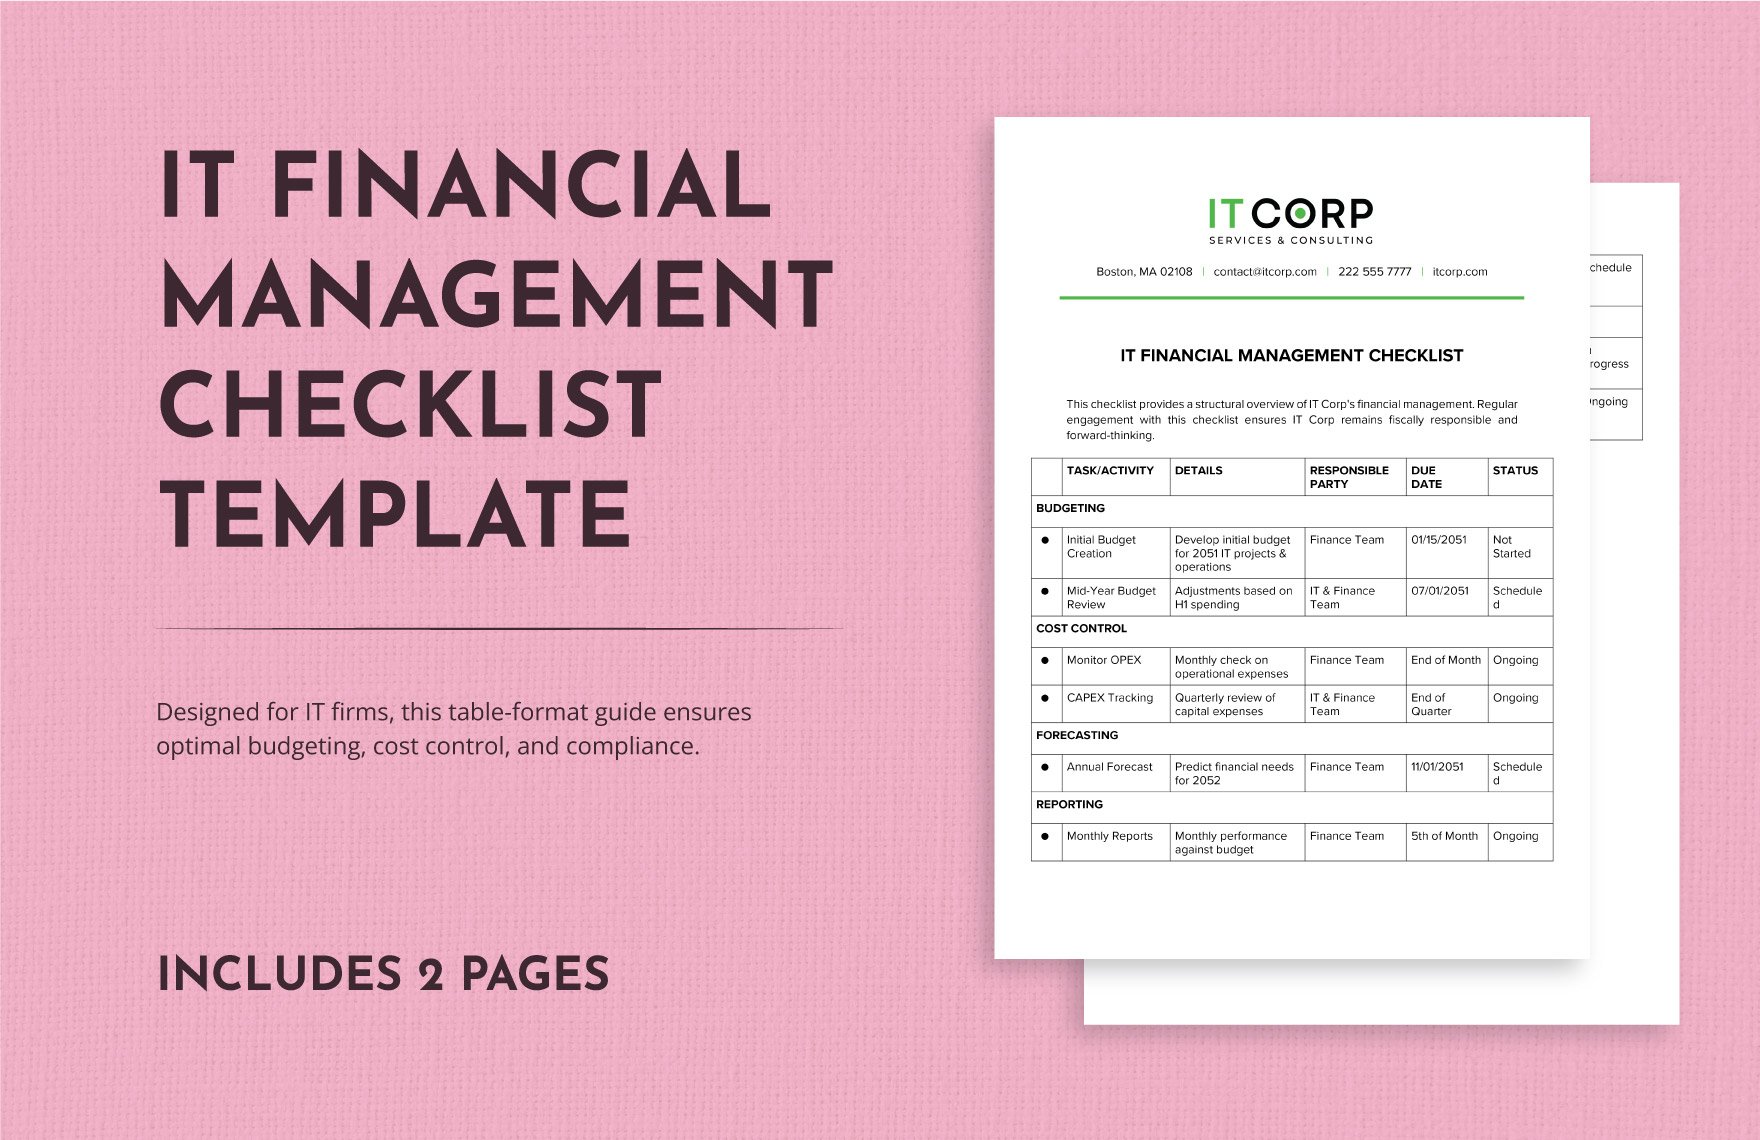 IT Financial Management Checklist Template